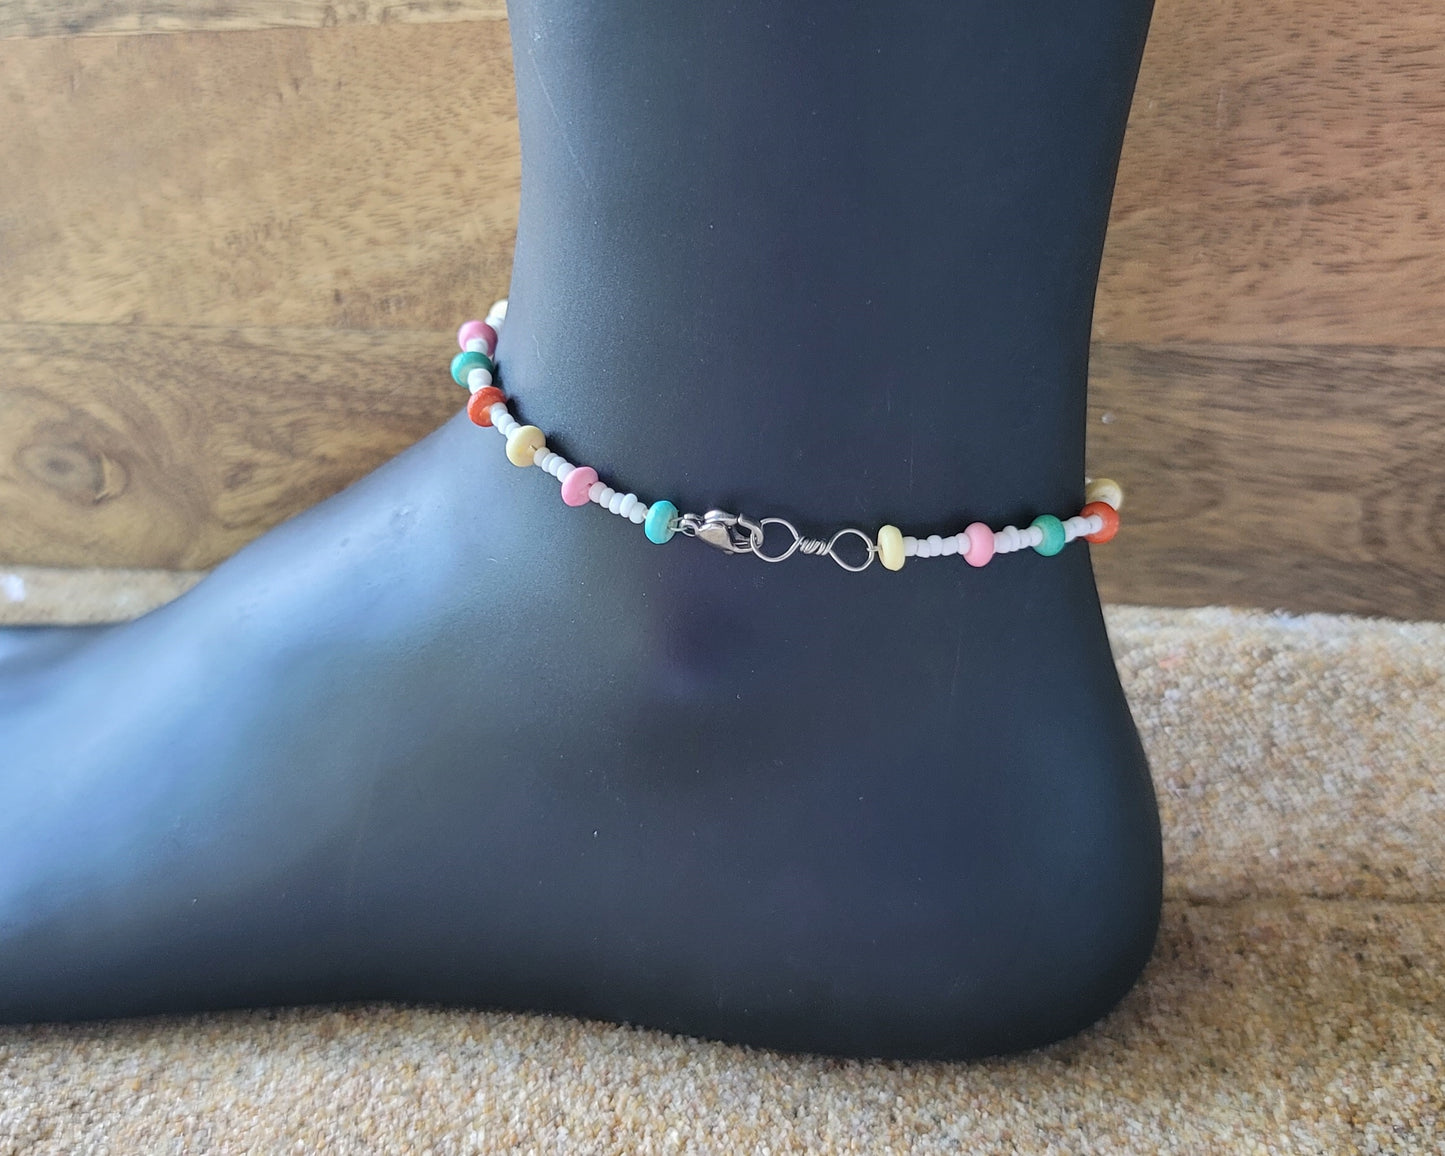 Beaded Turquoise Sideways Cross Boho Anklet / Ankle Bracelet, Turquoise Sideways Cross with Multi Color Beads